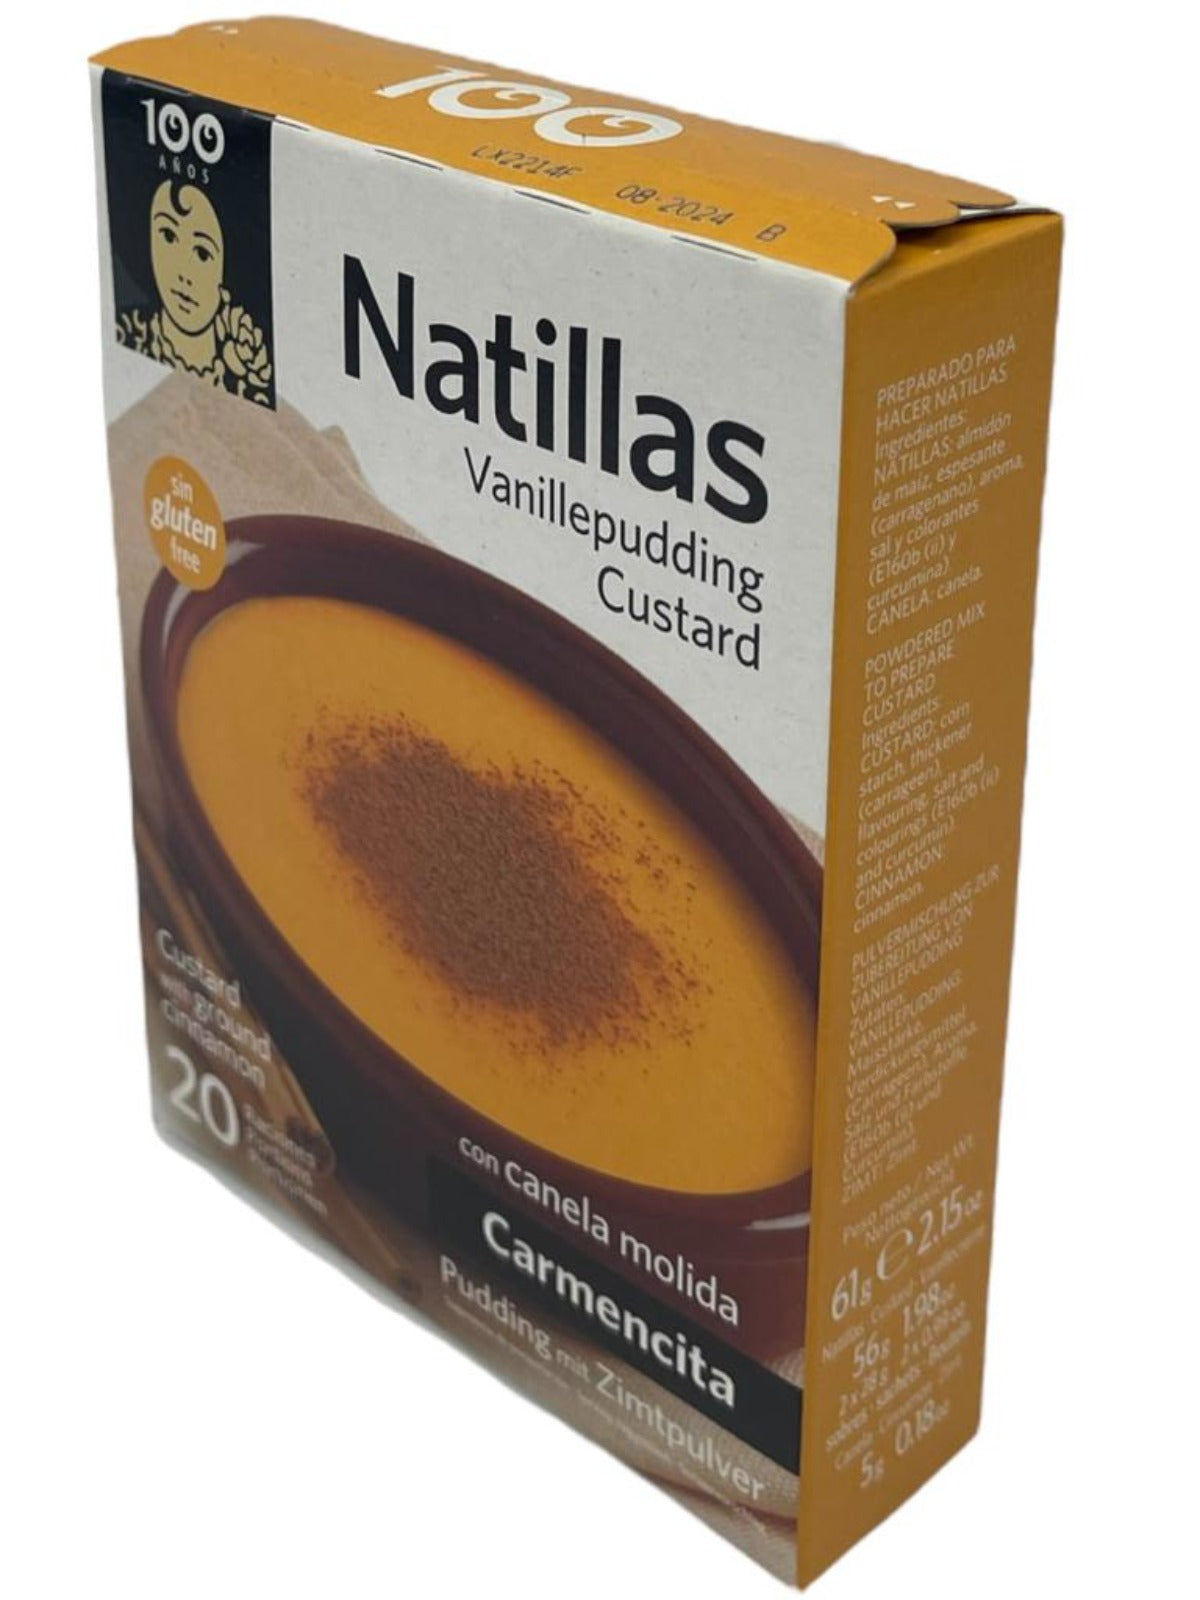 Carmencita Natillas Homemade Custard Custard Mix 61g